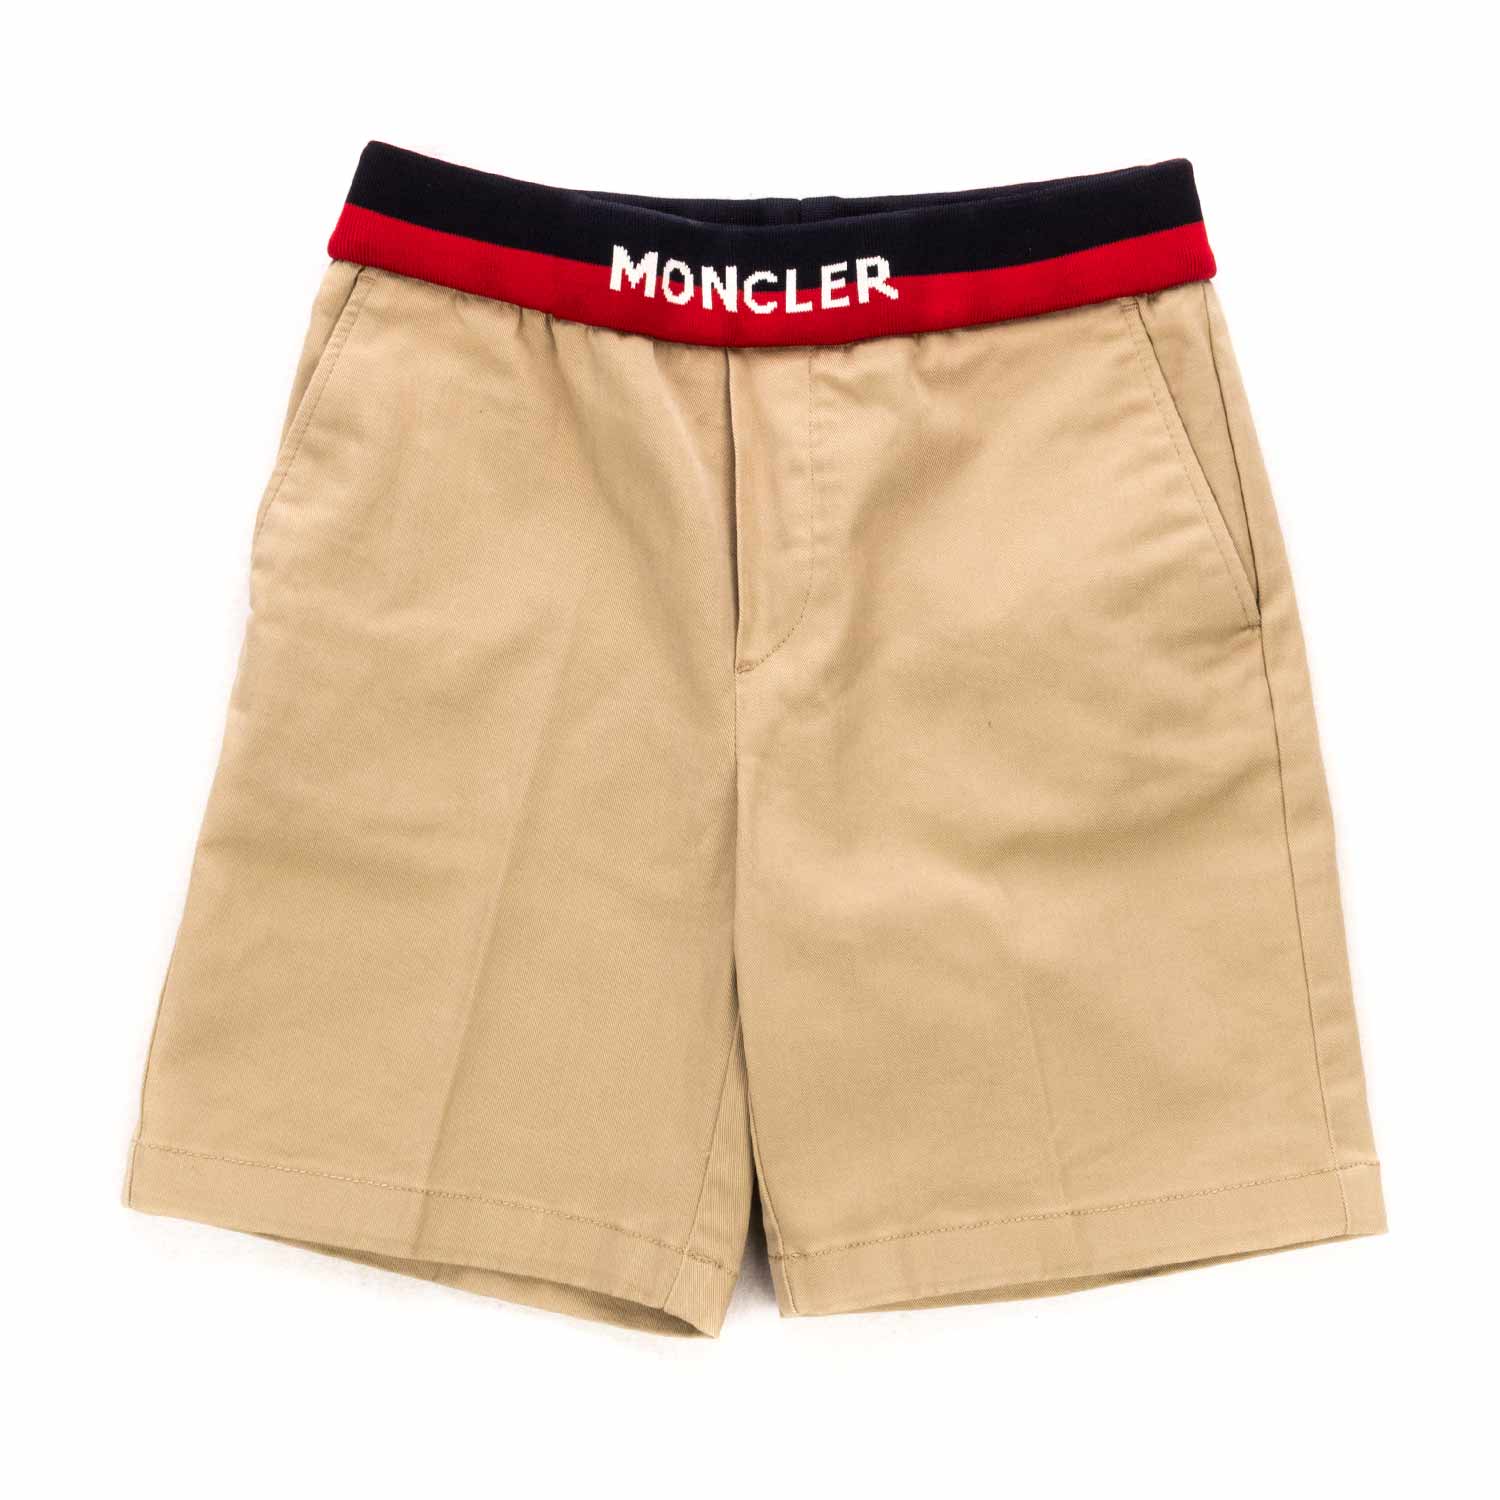 Moncler Bermuda Shorts Outlet Online, UP TO 58% OFF | www.loop-cn.com